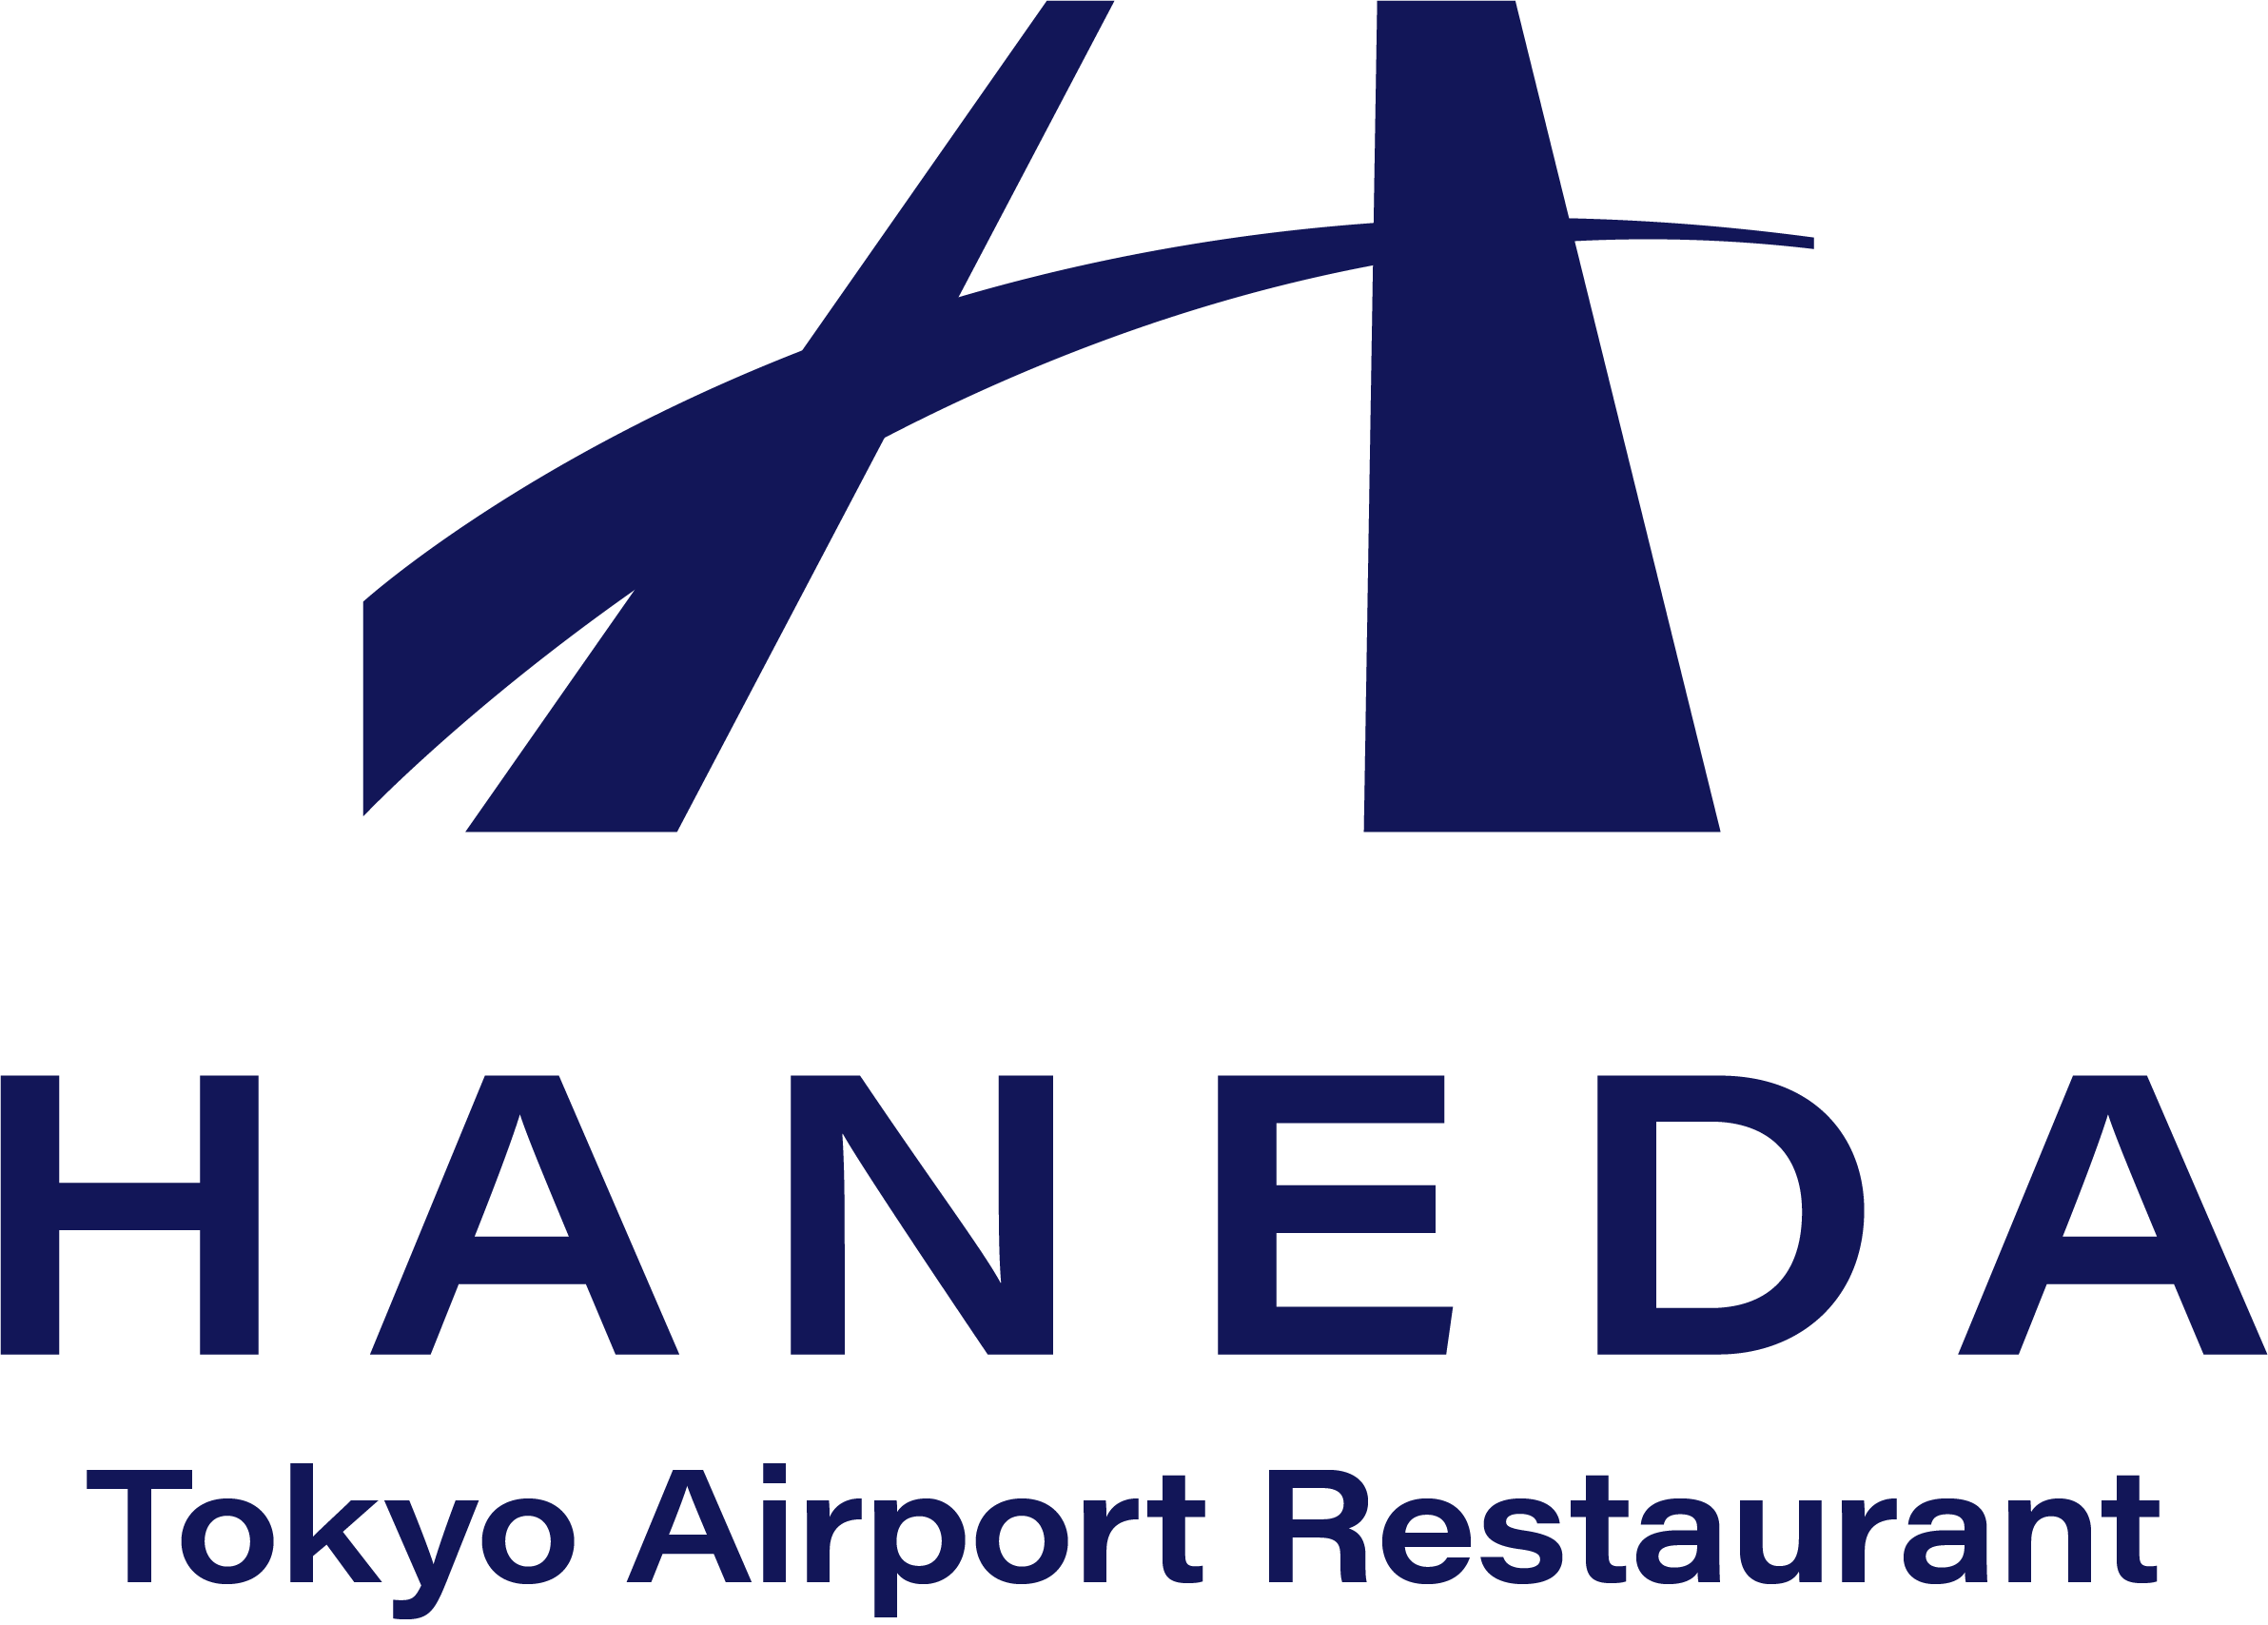 ART Tokyo Airport Restaurant